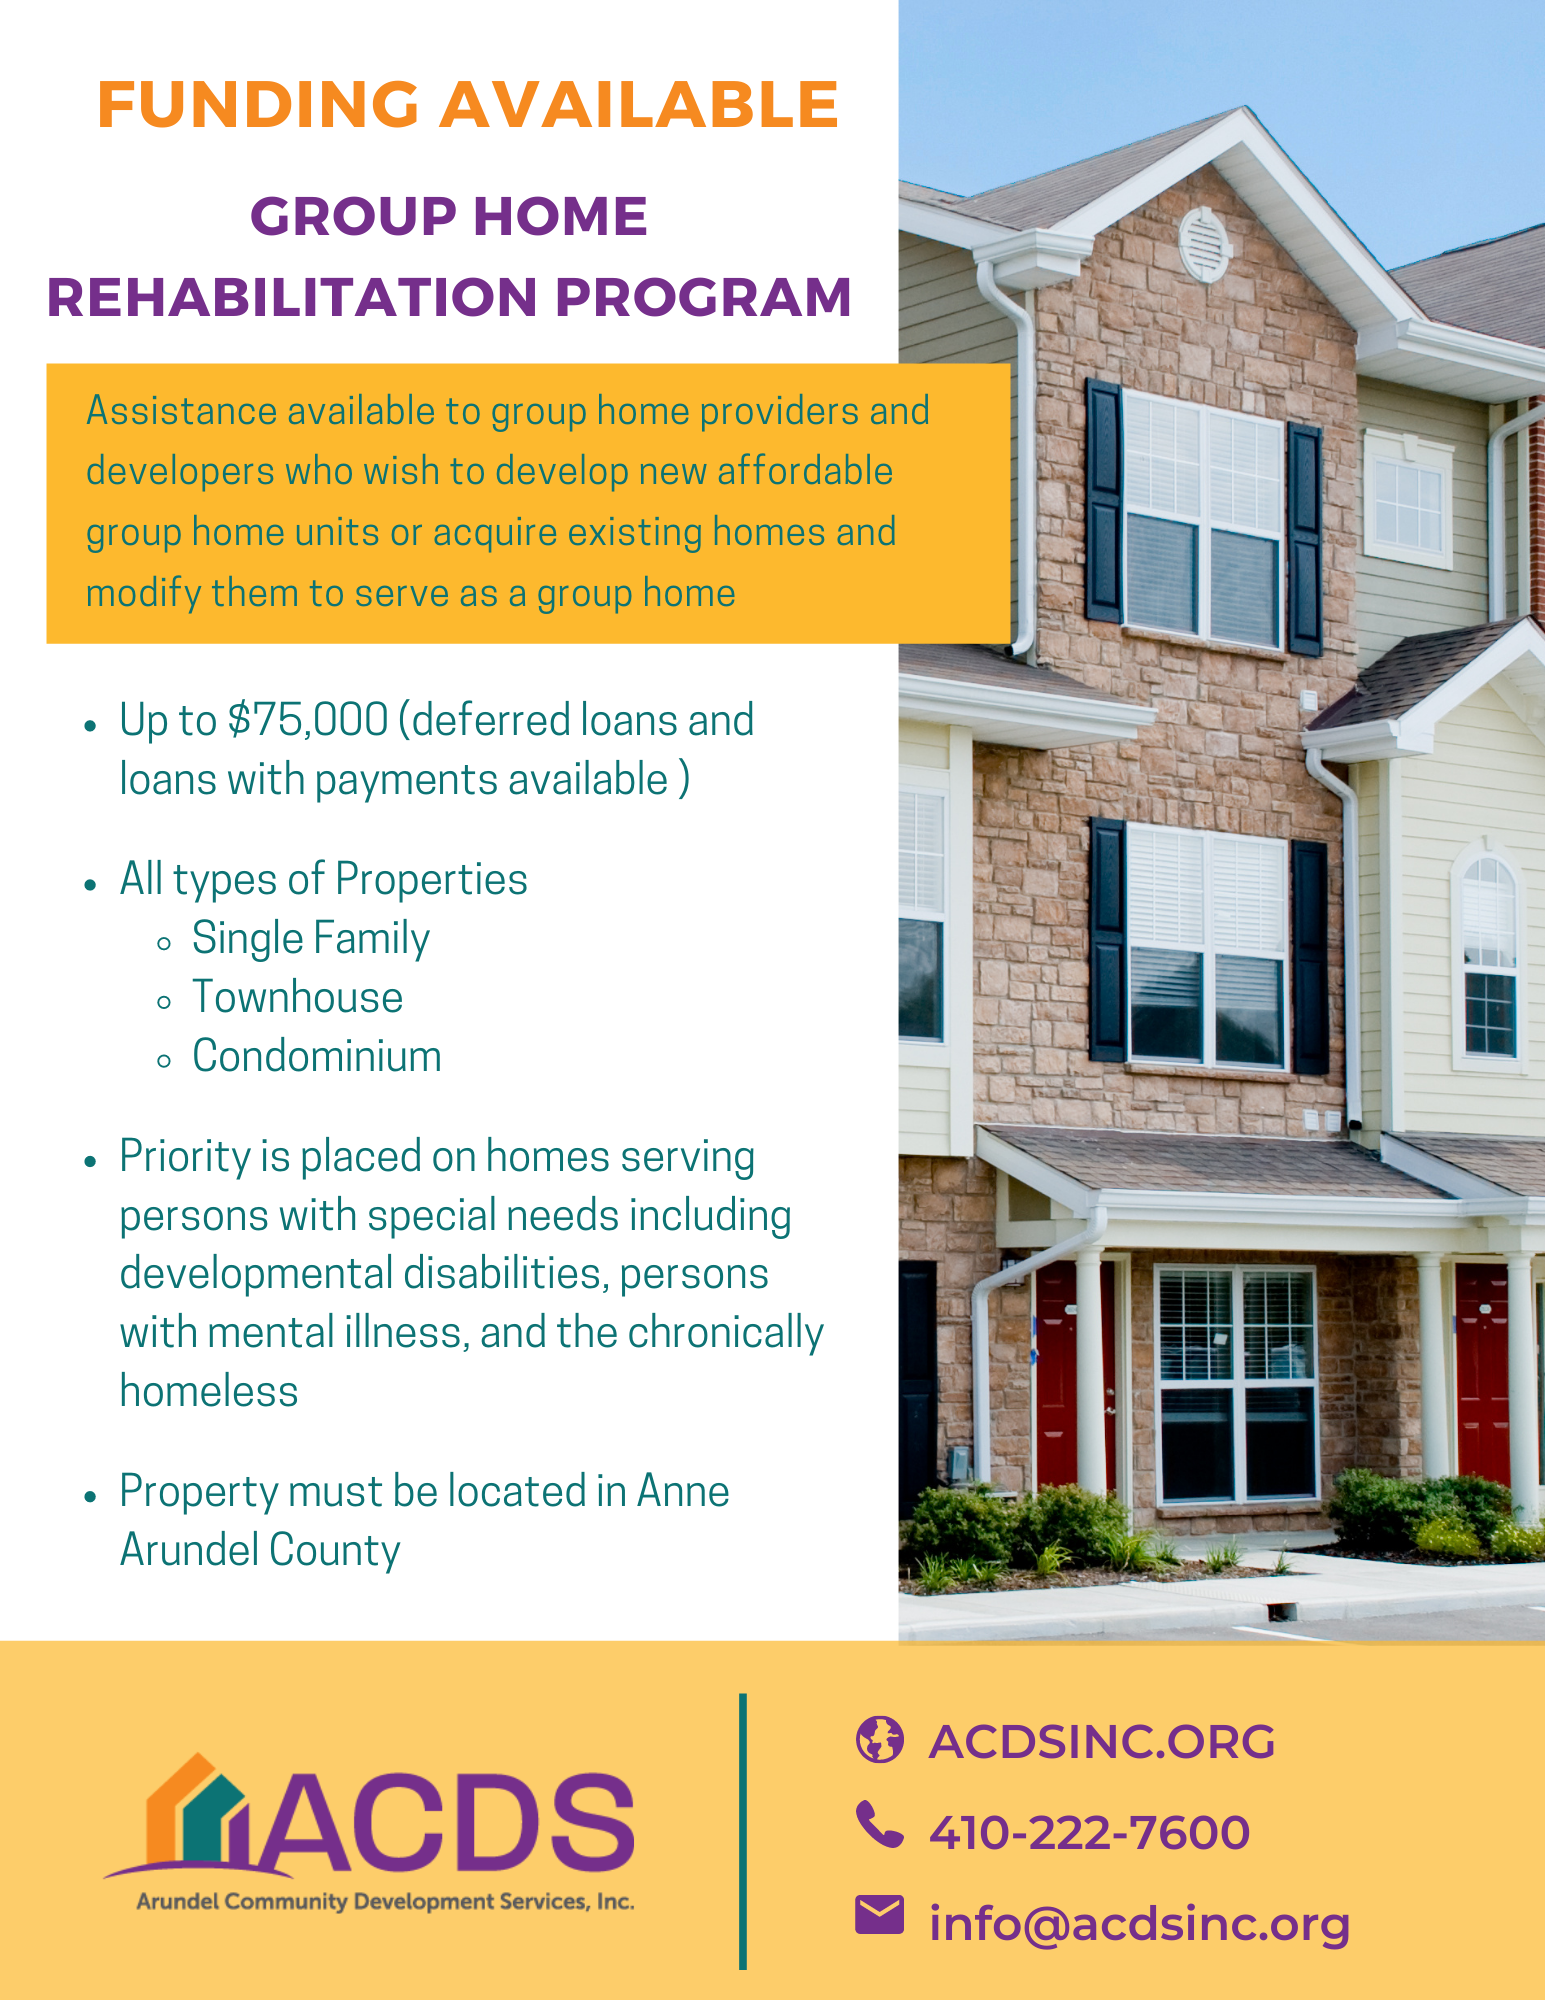 Funding Available for Group Home Rehabilitation Program